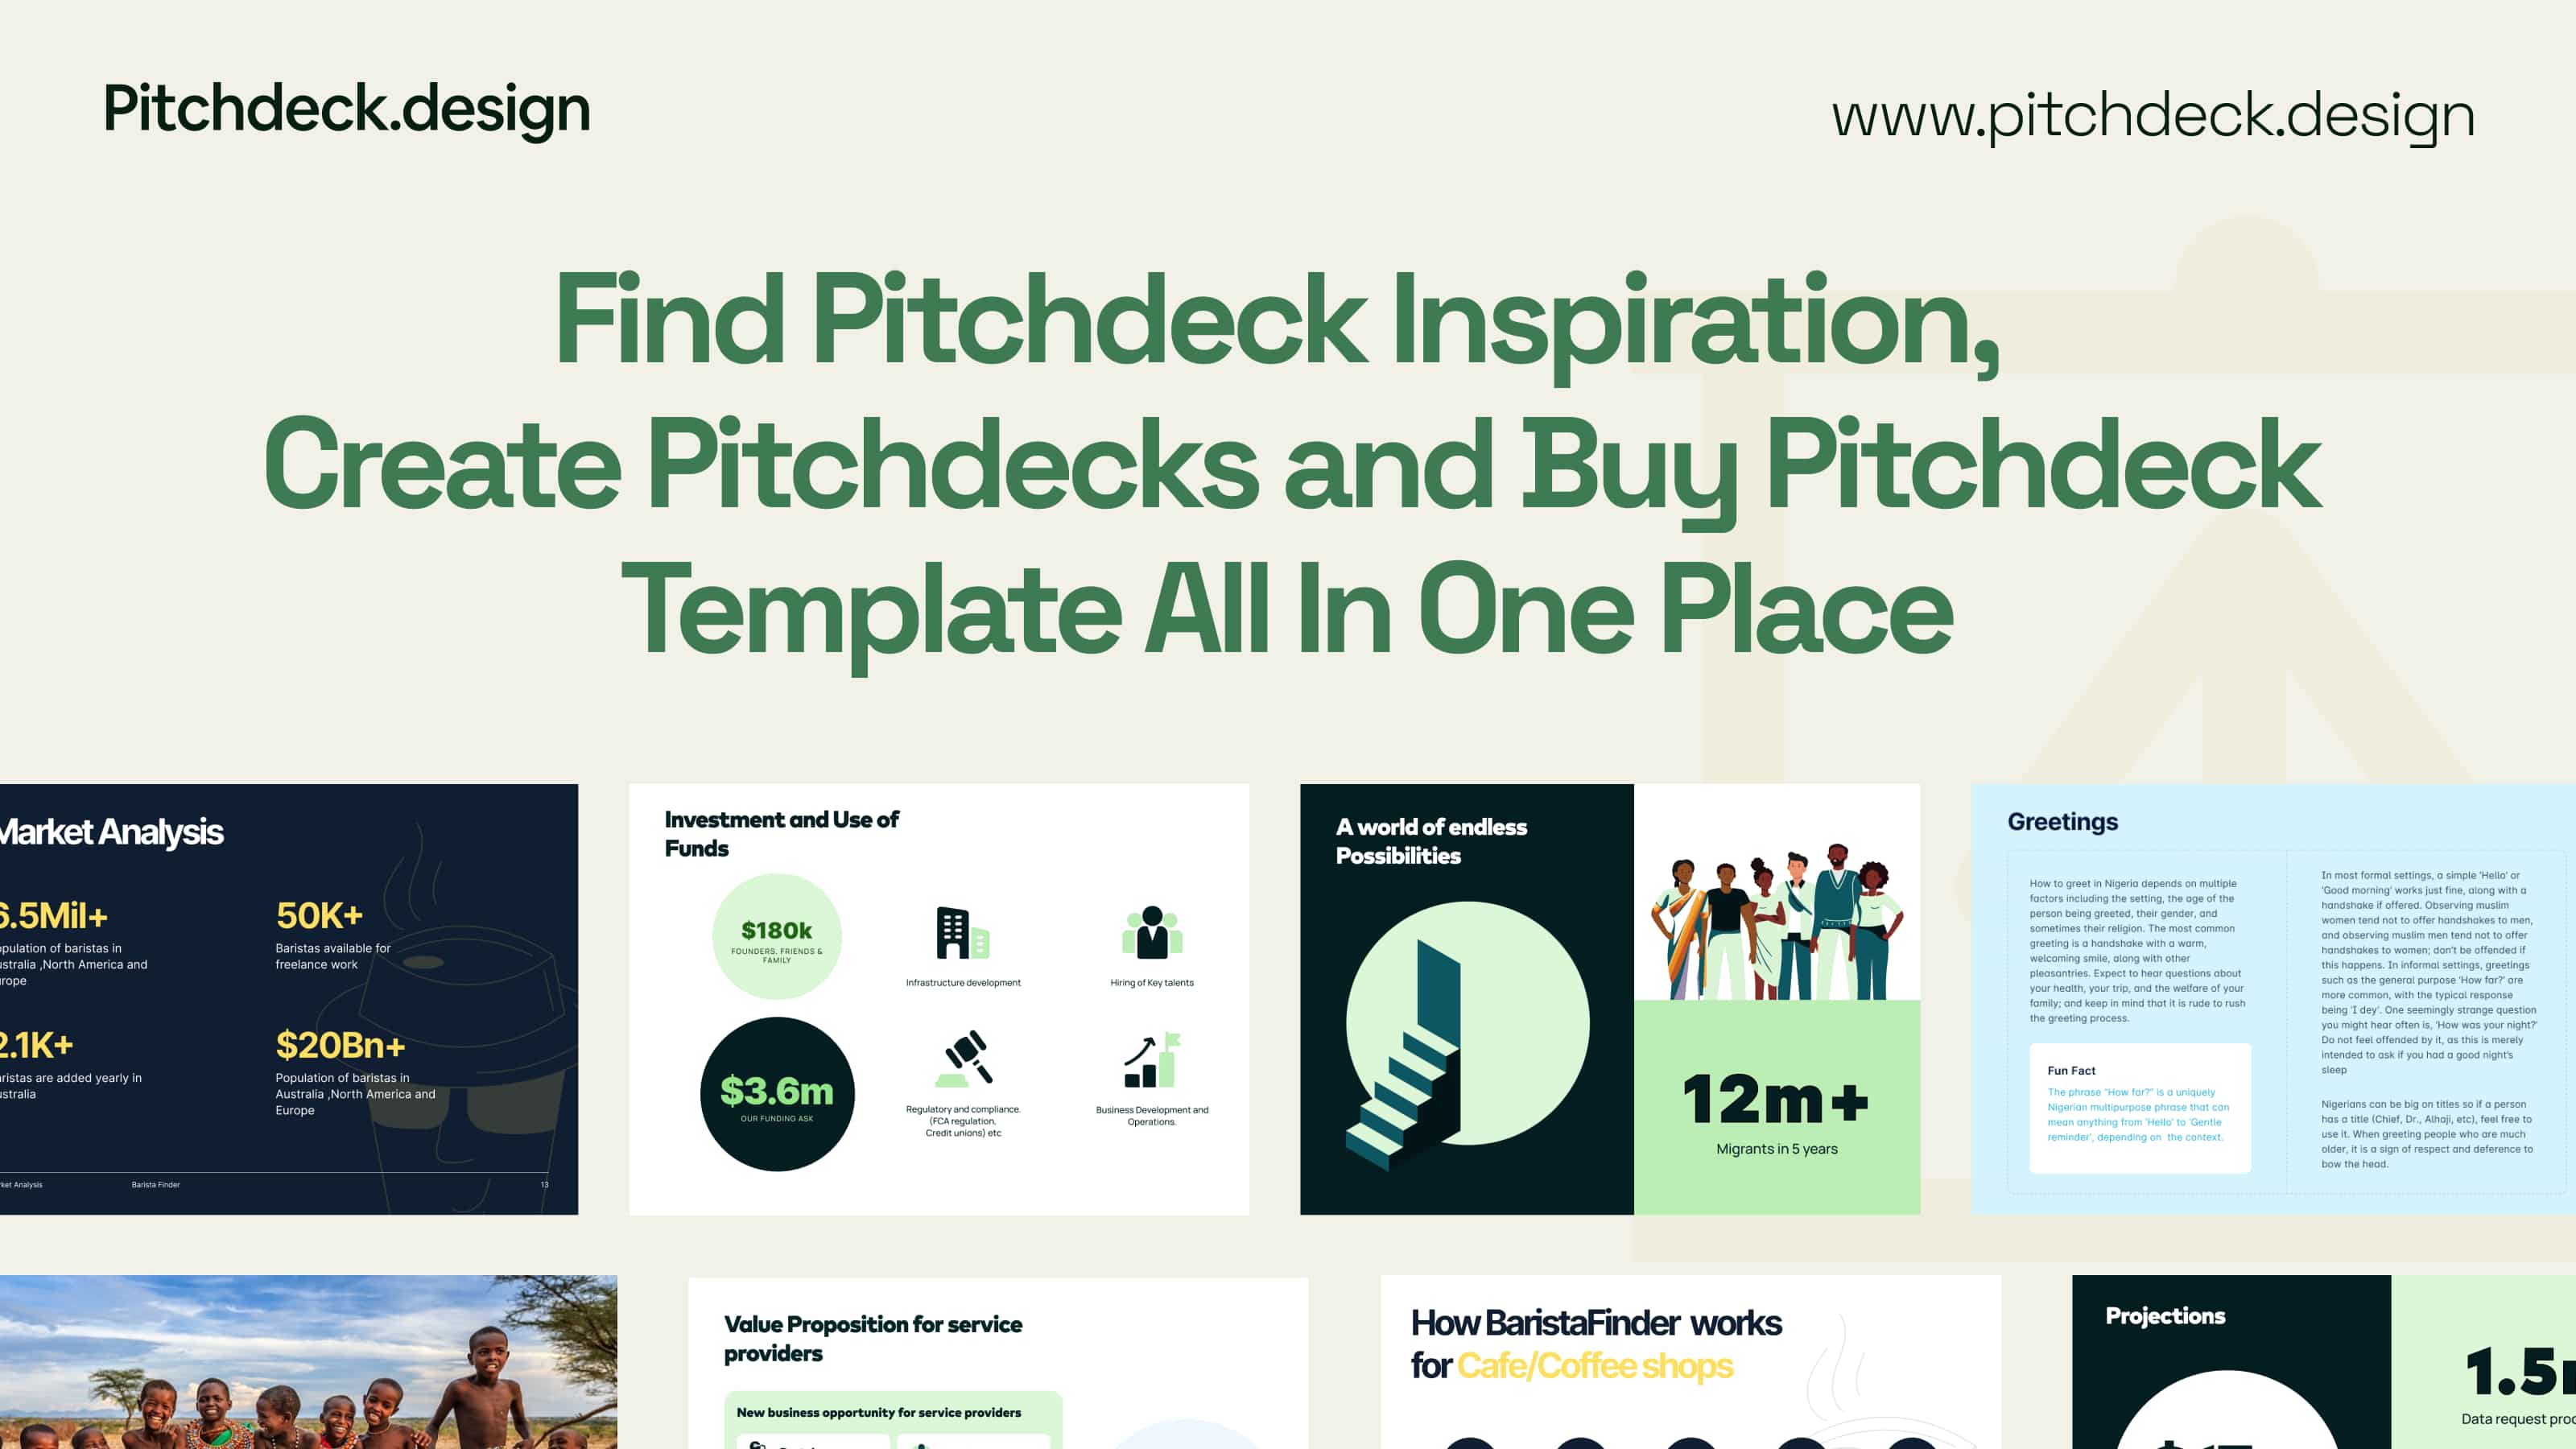 pitchdeck.design image